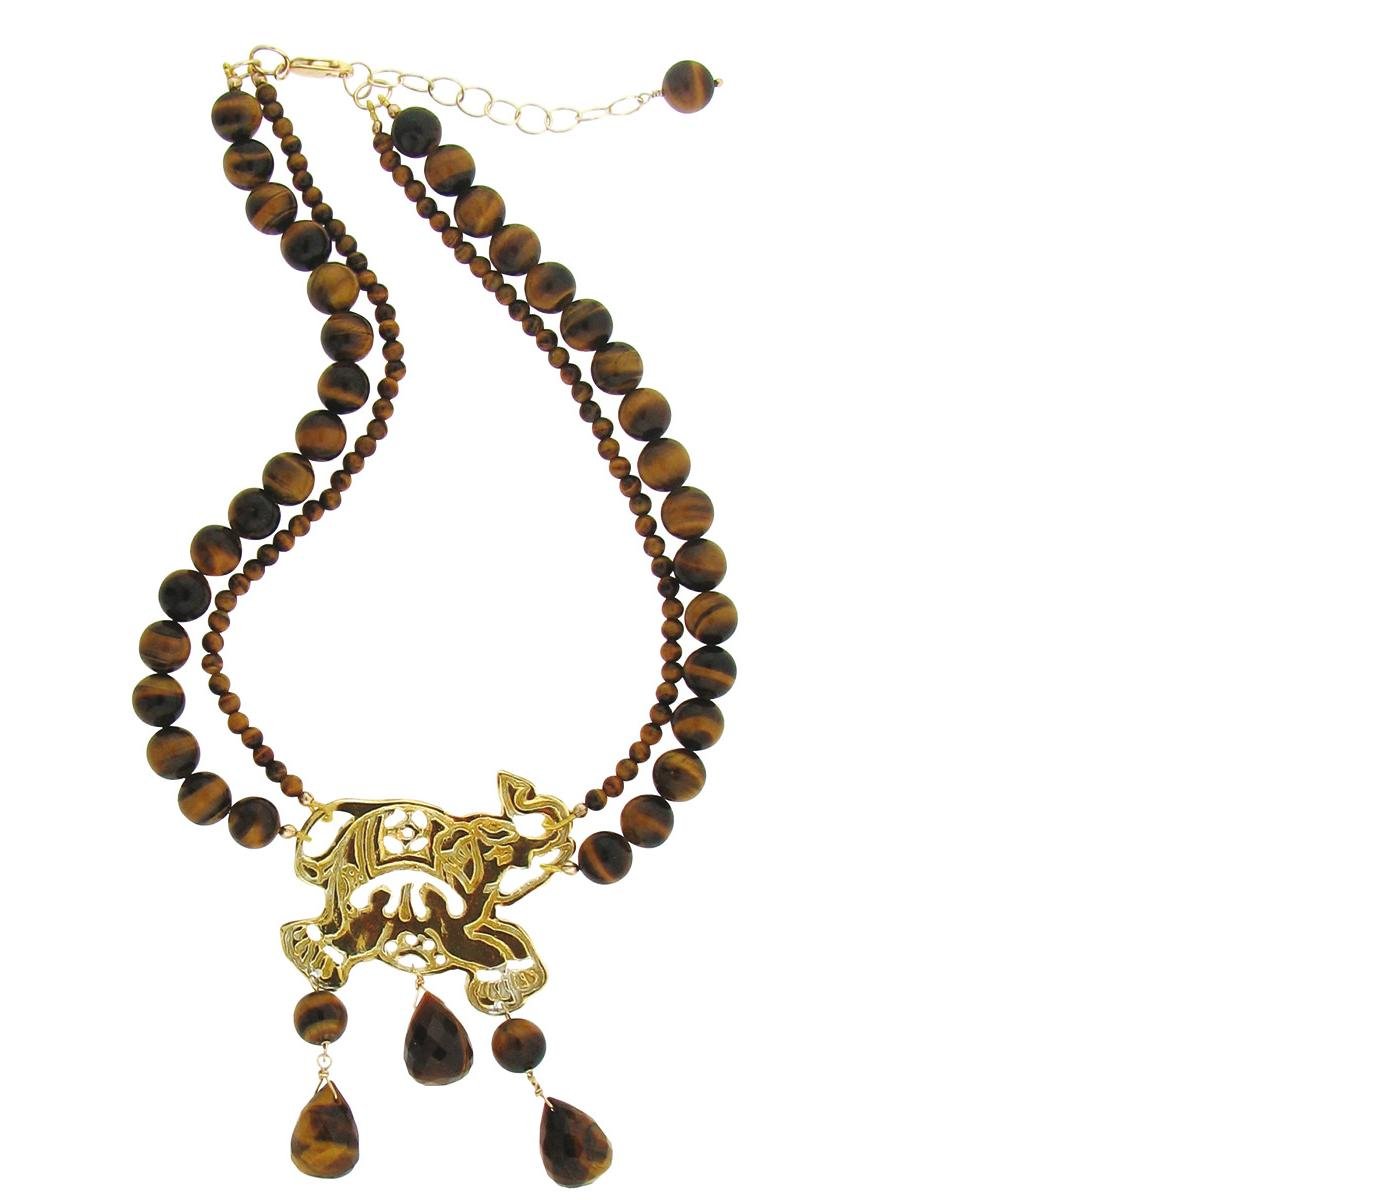 Necklace by JJ Singh Jewelry